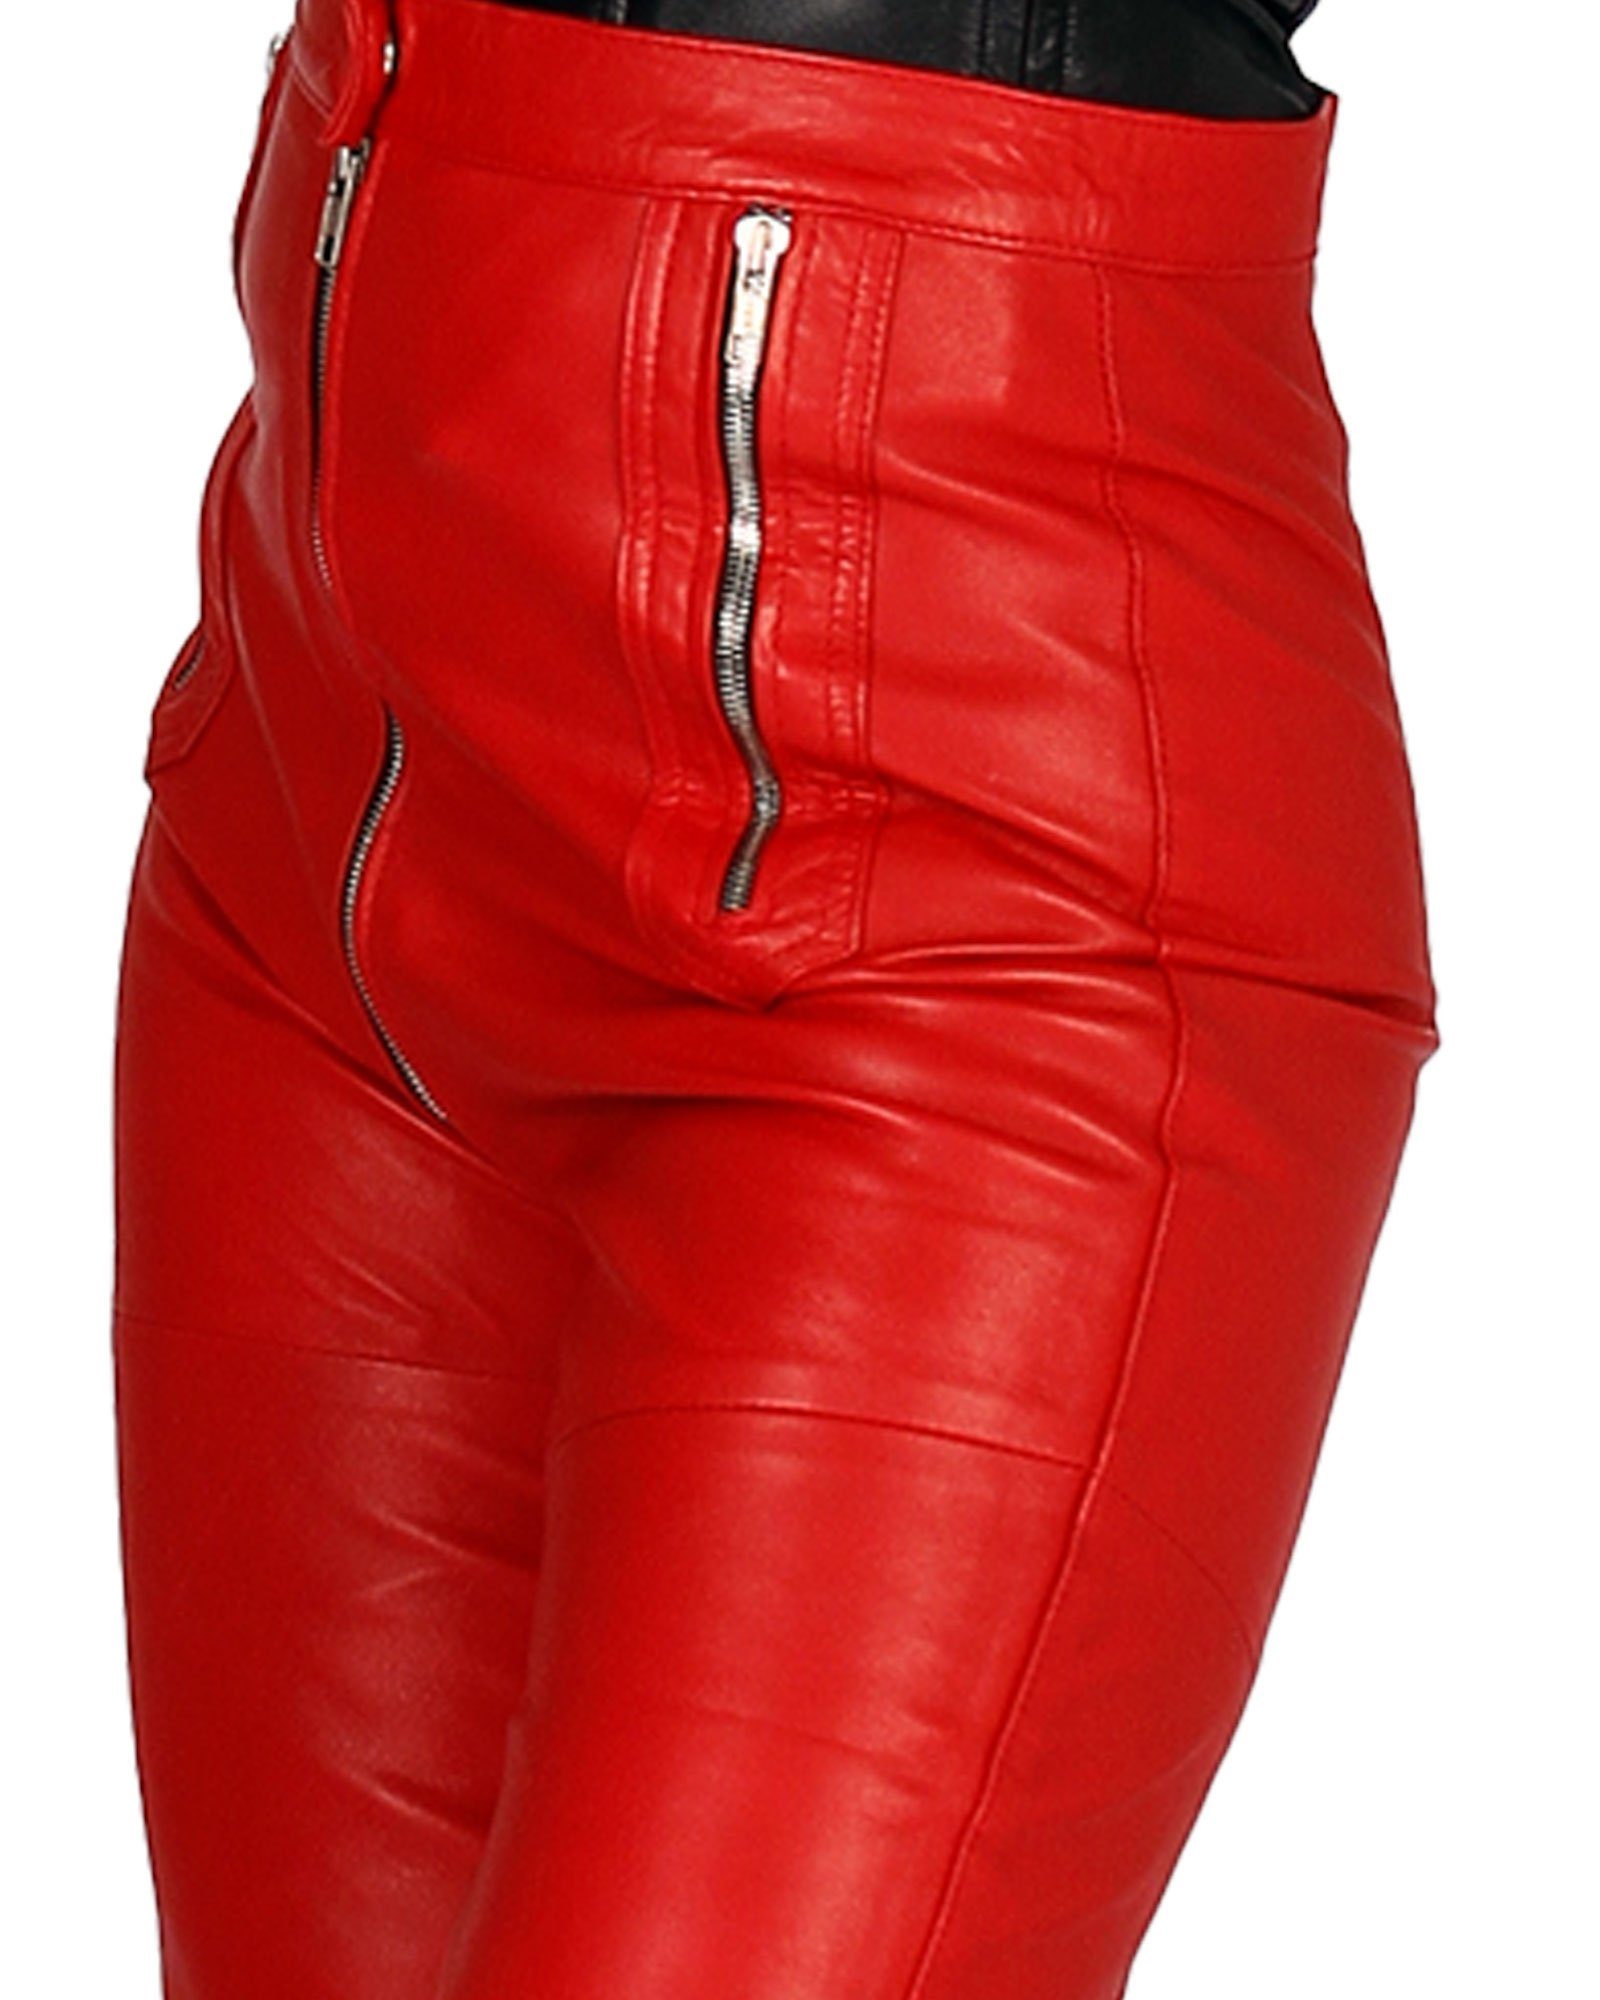 Lederhose Rot Kim Lederhose Echtes Leder Fetish-Design Schrittreißverschluss Schrittreißverschluß